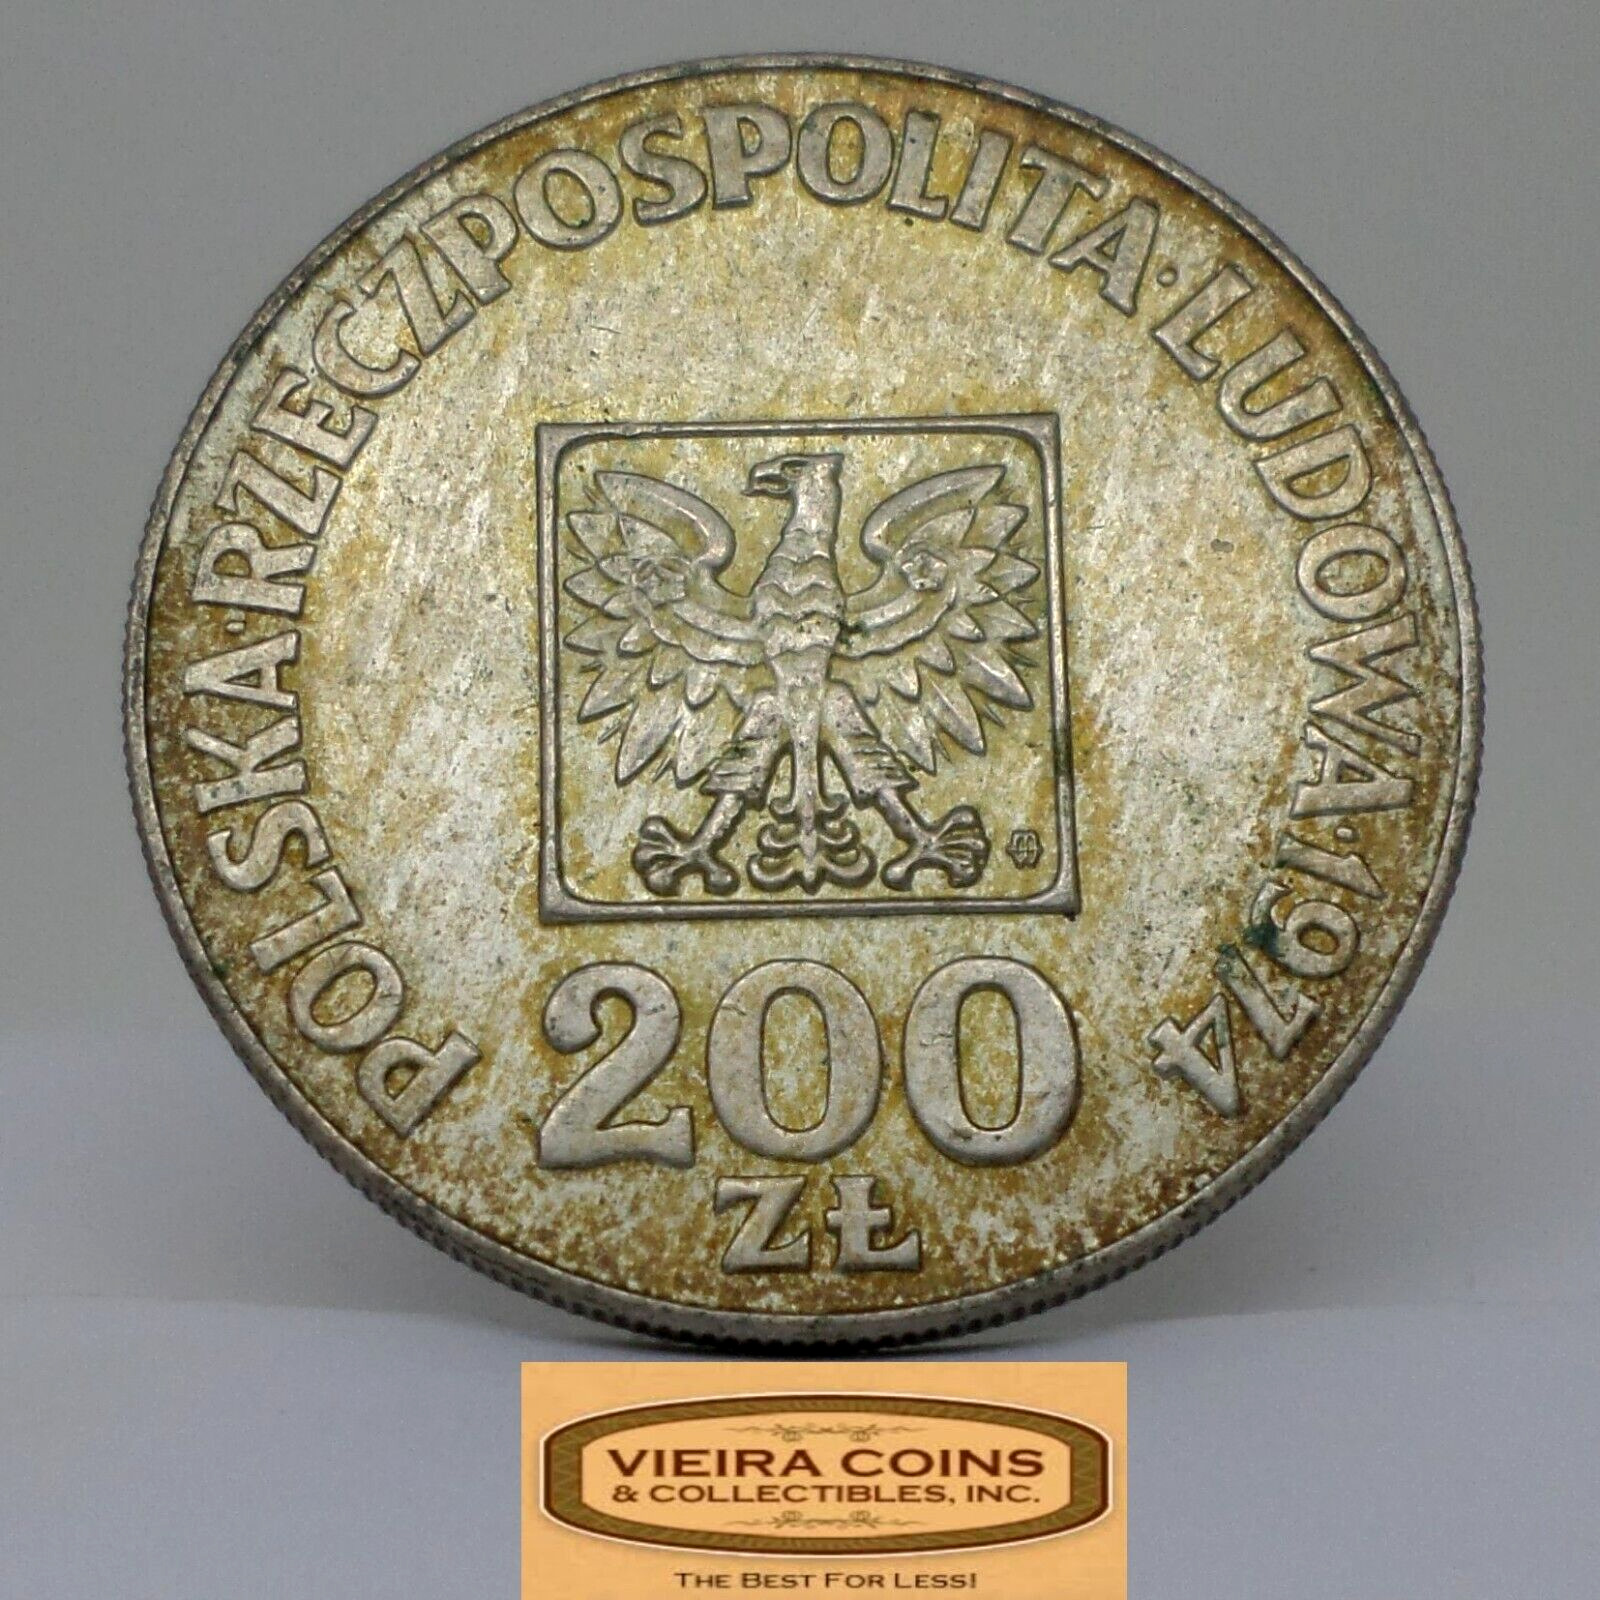 1974 Poland Silver 200 Zlotych - #c26057nq